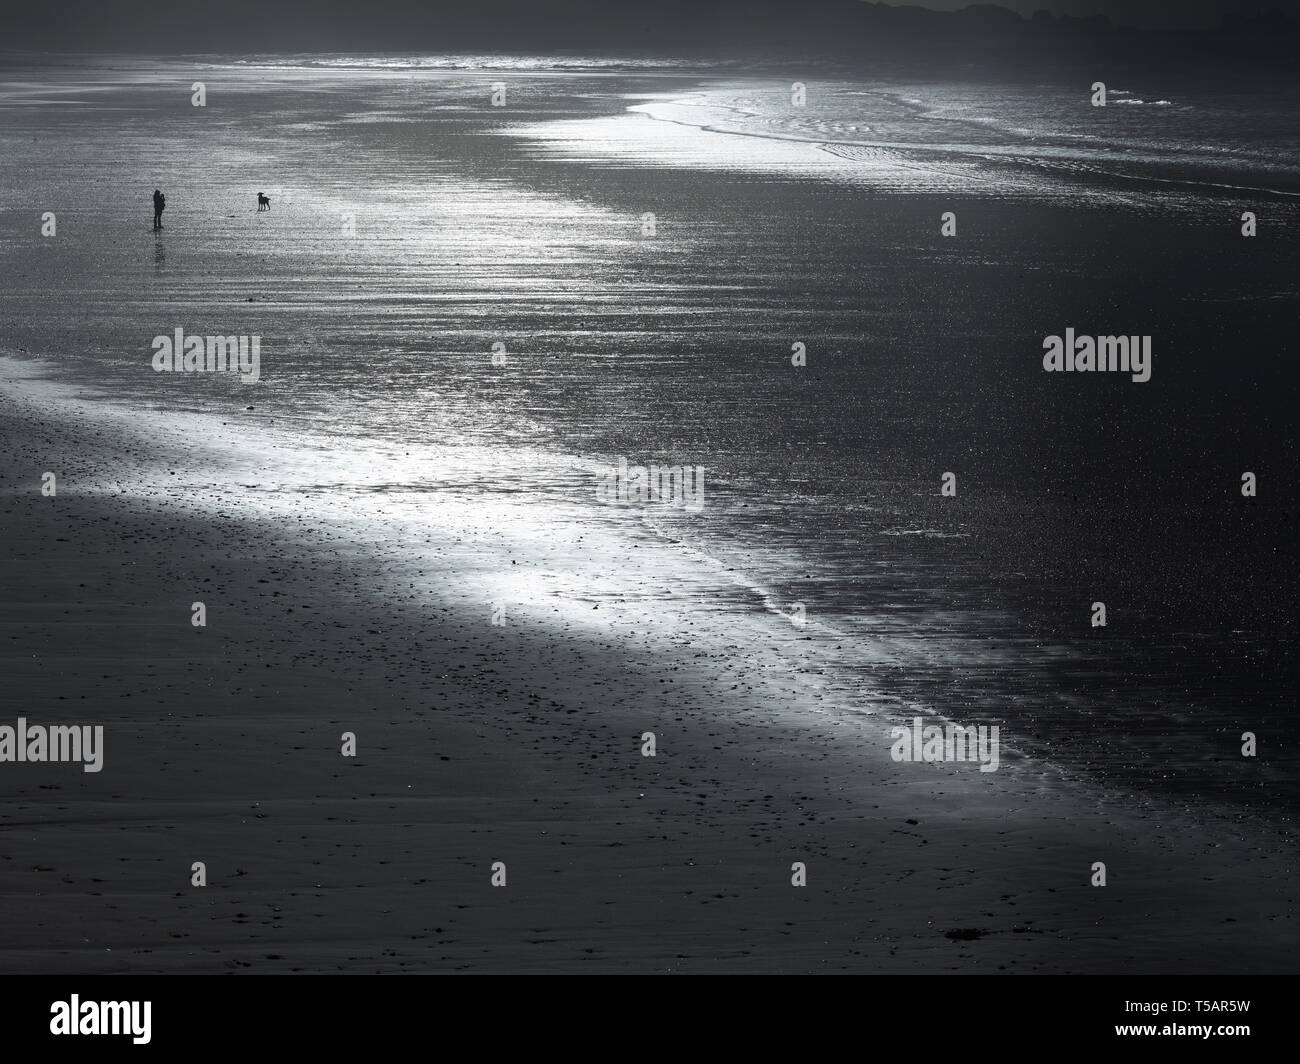 St Ouen's Bay in Jersey, Channel Islands, the longest sandy beach on the island. Stock Photo